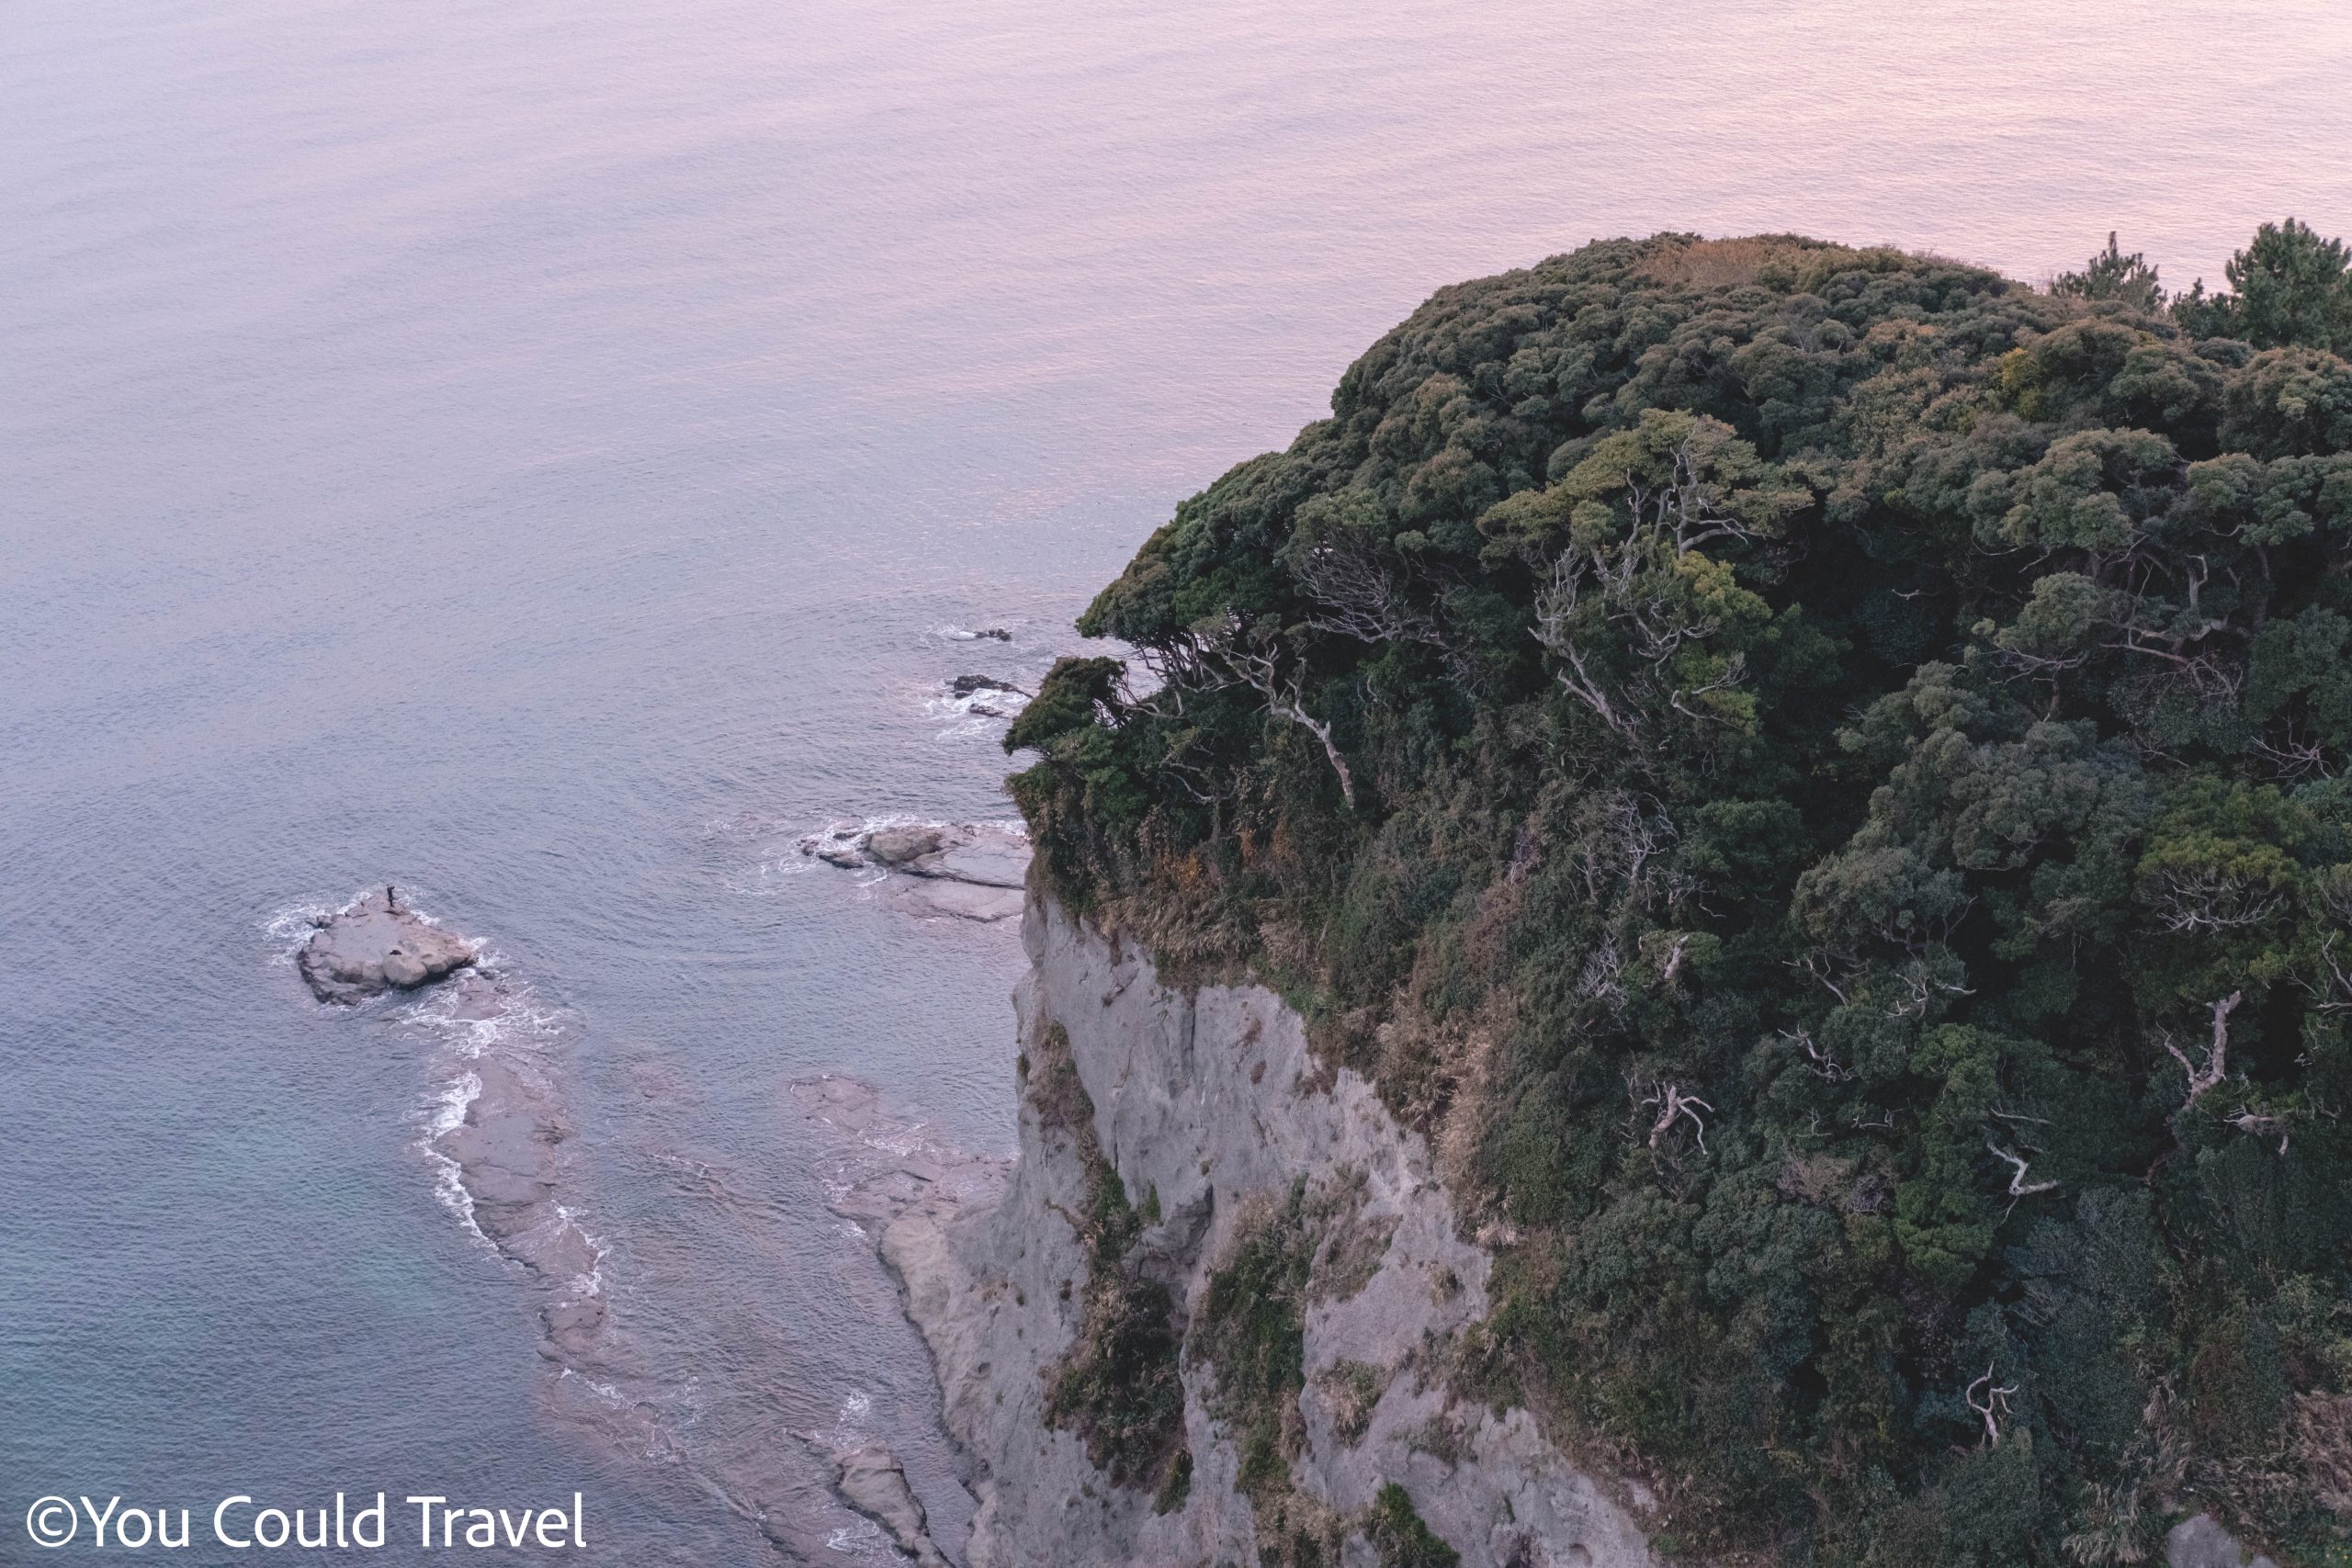 Views of Enoshima island cliffs